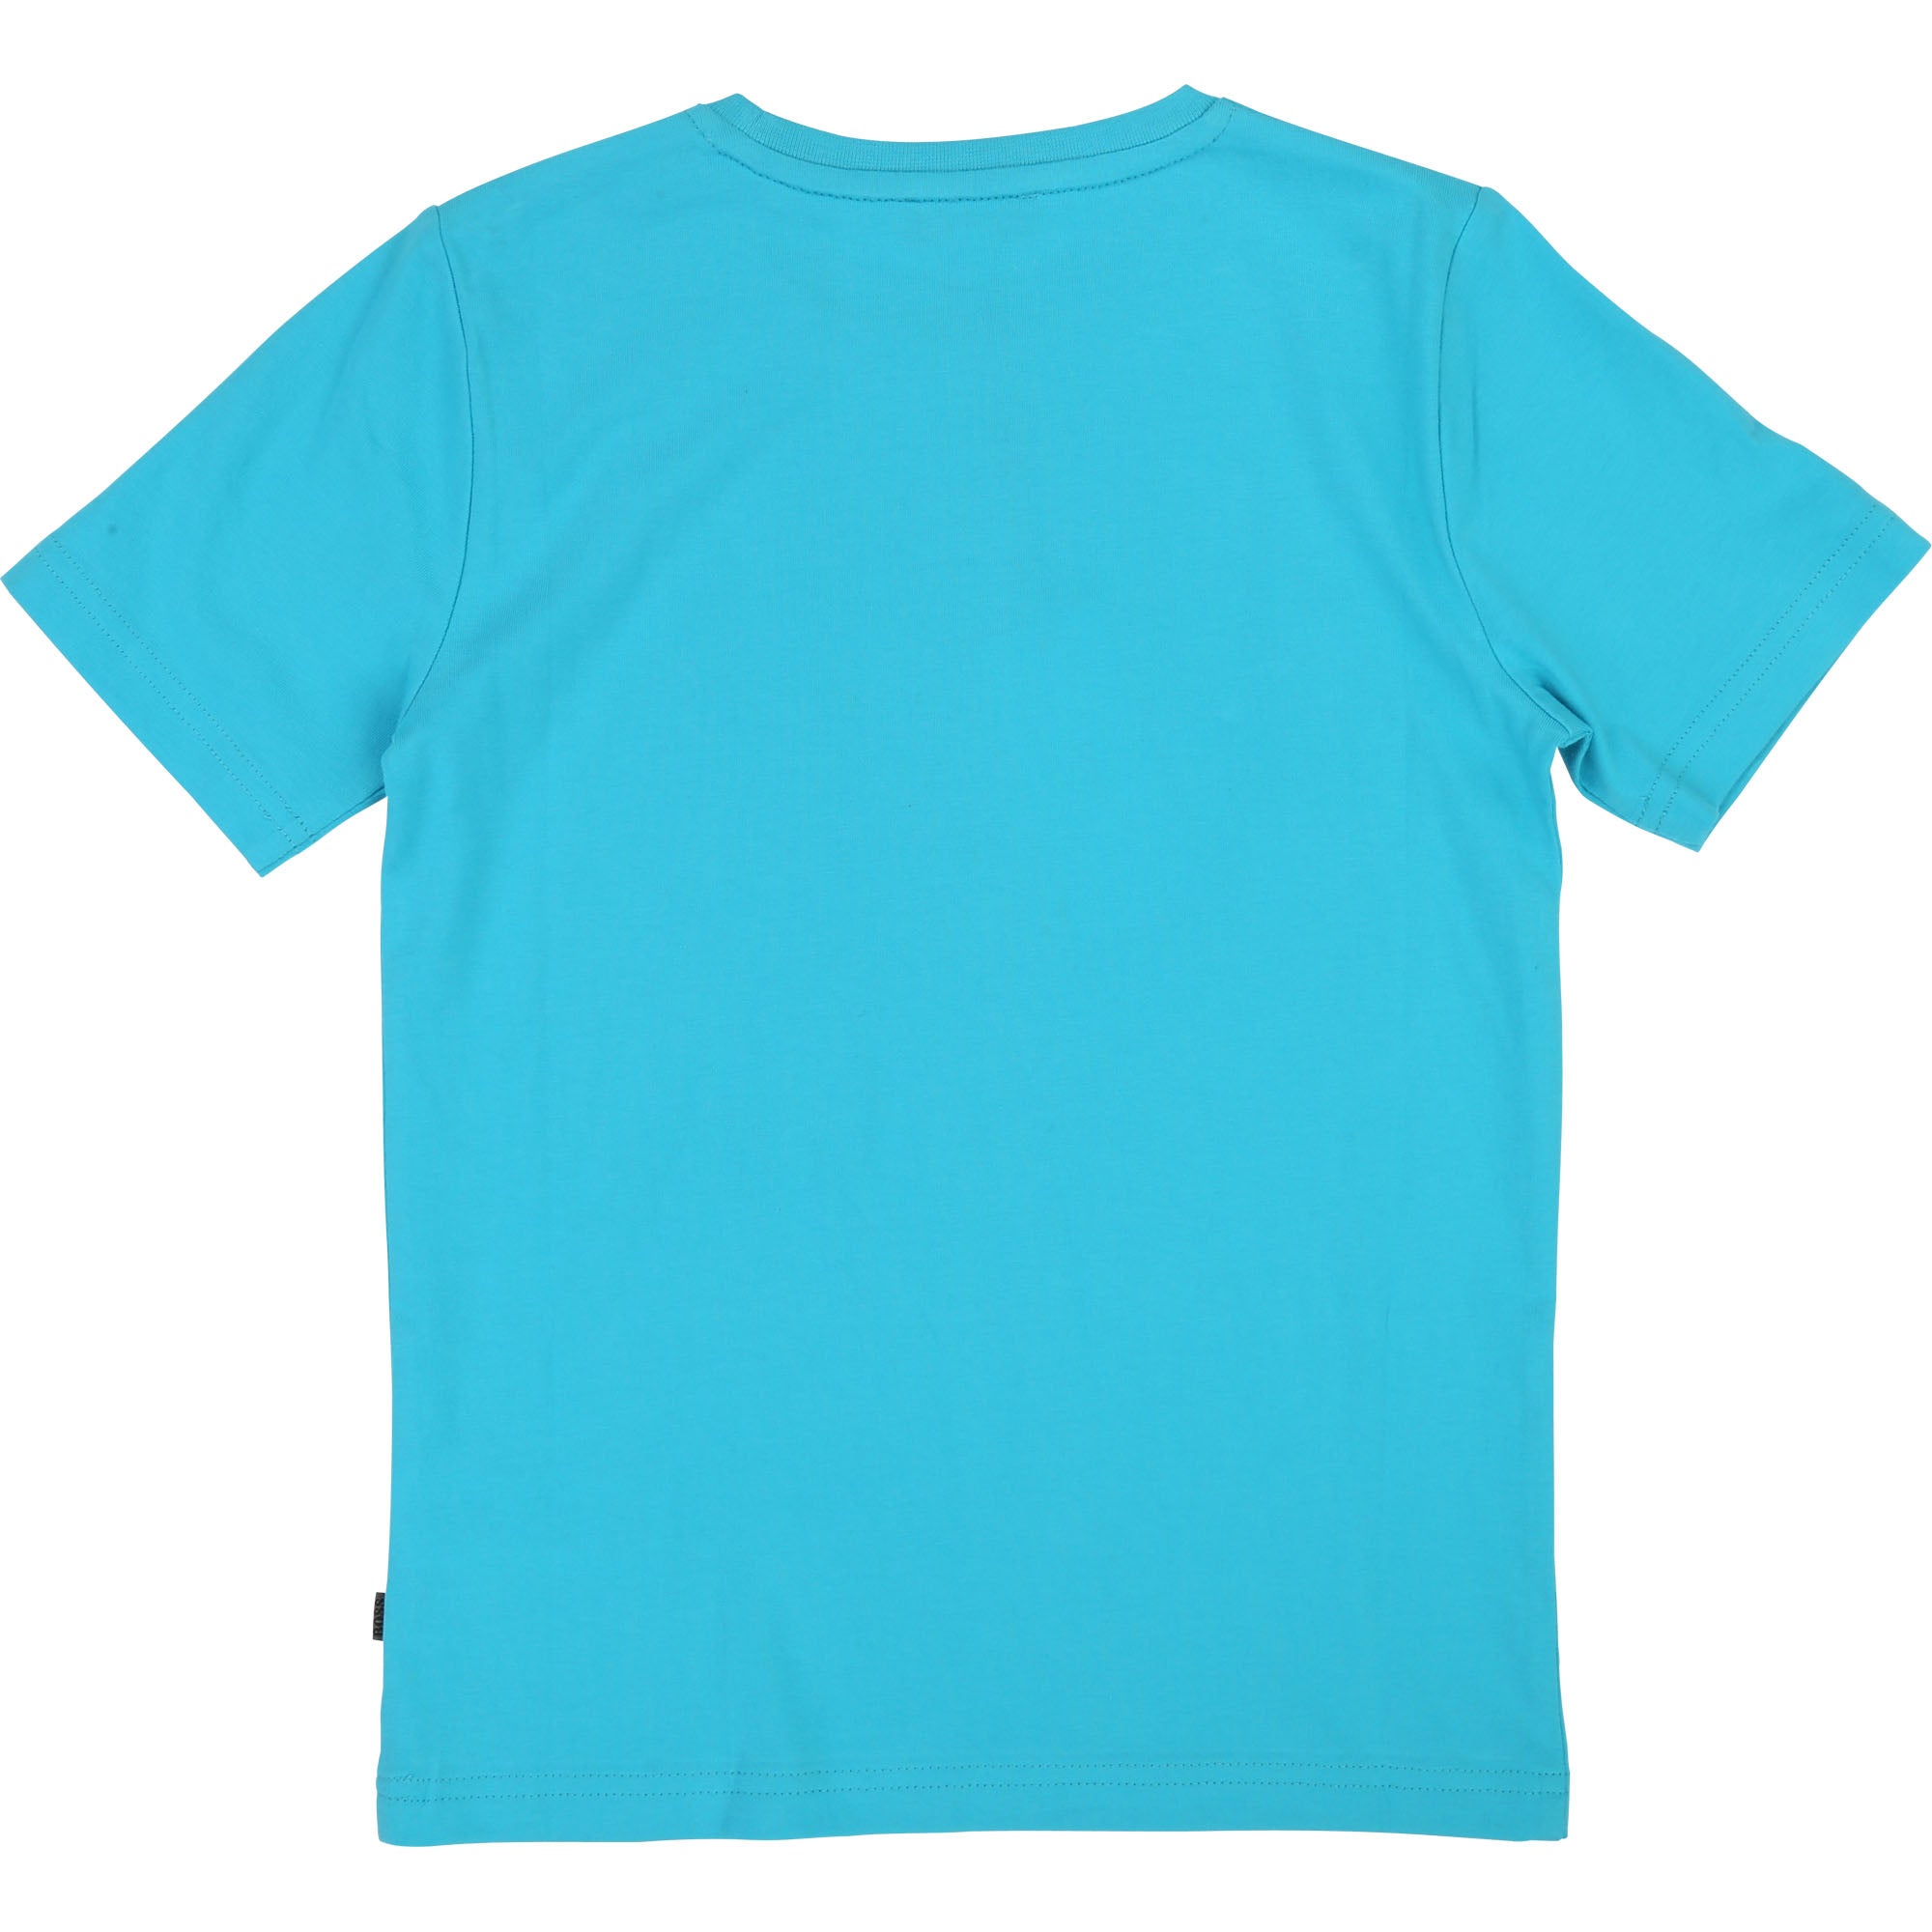 Boys Sky Blue Cotton T-shirt